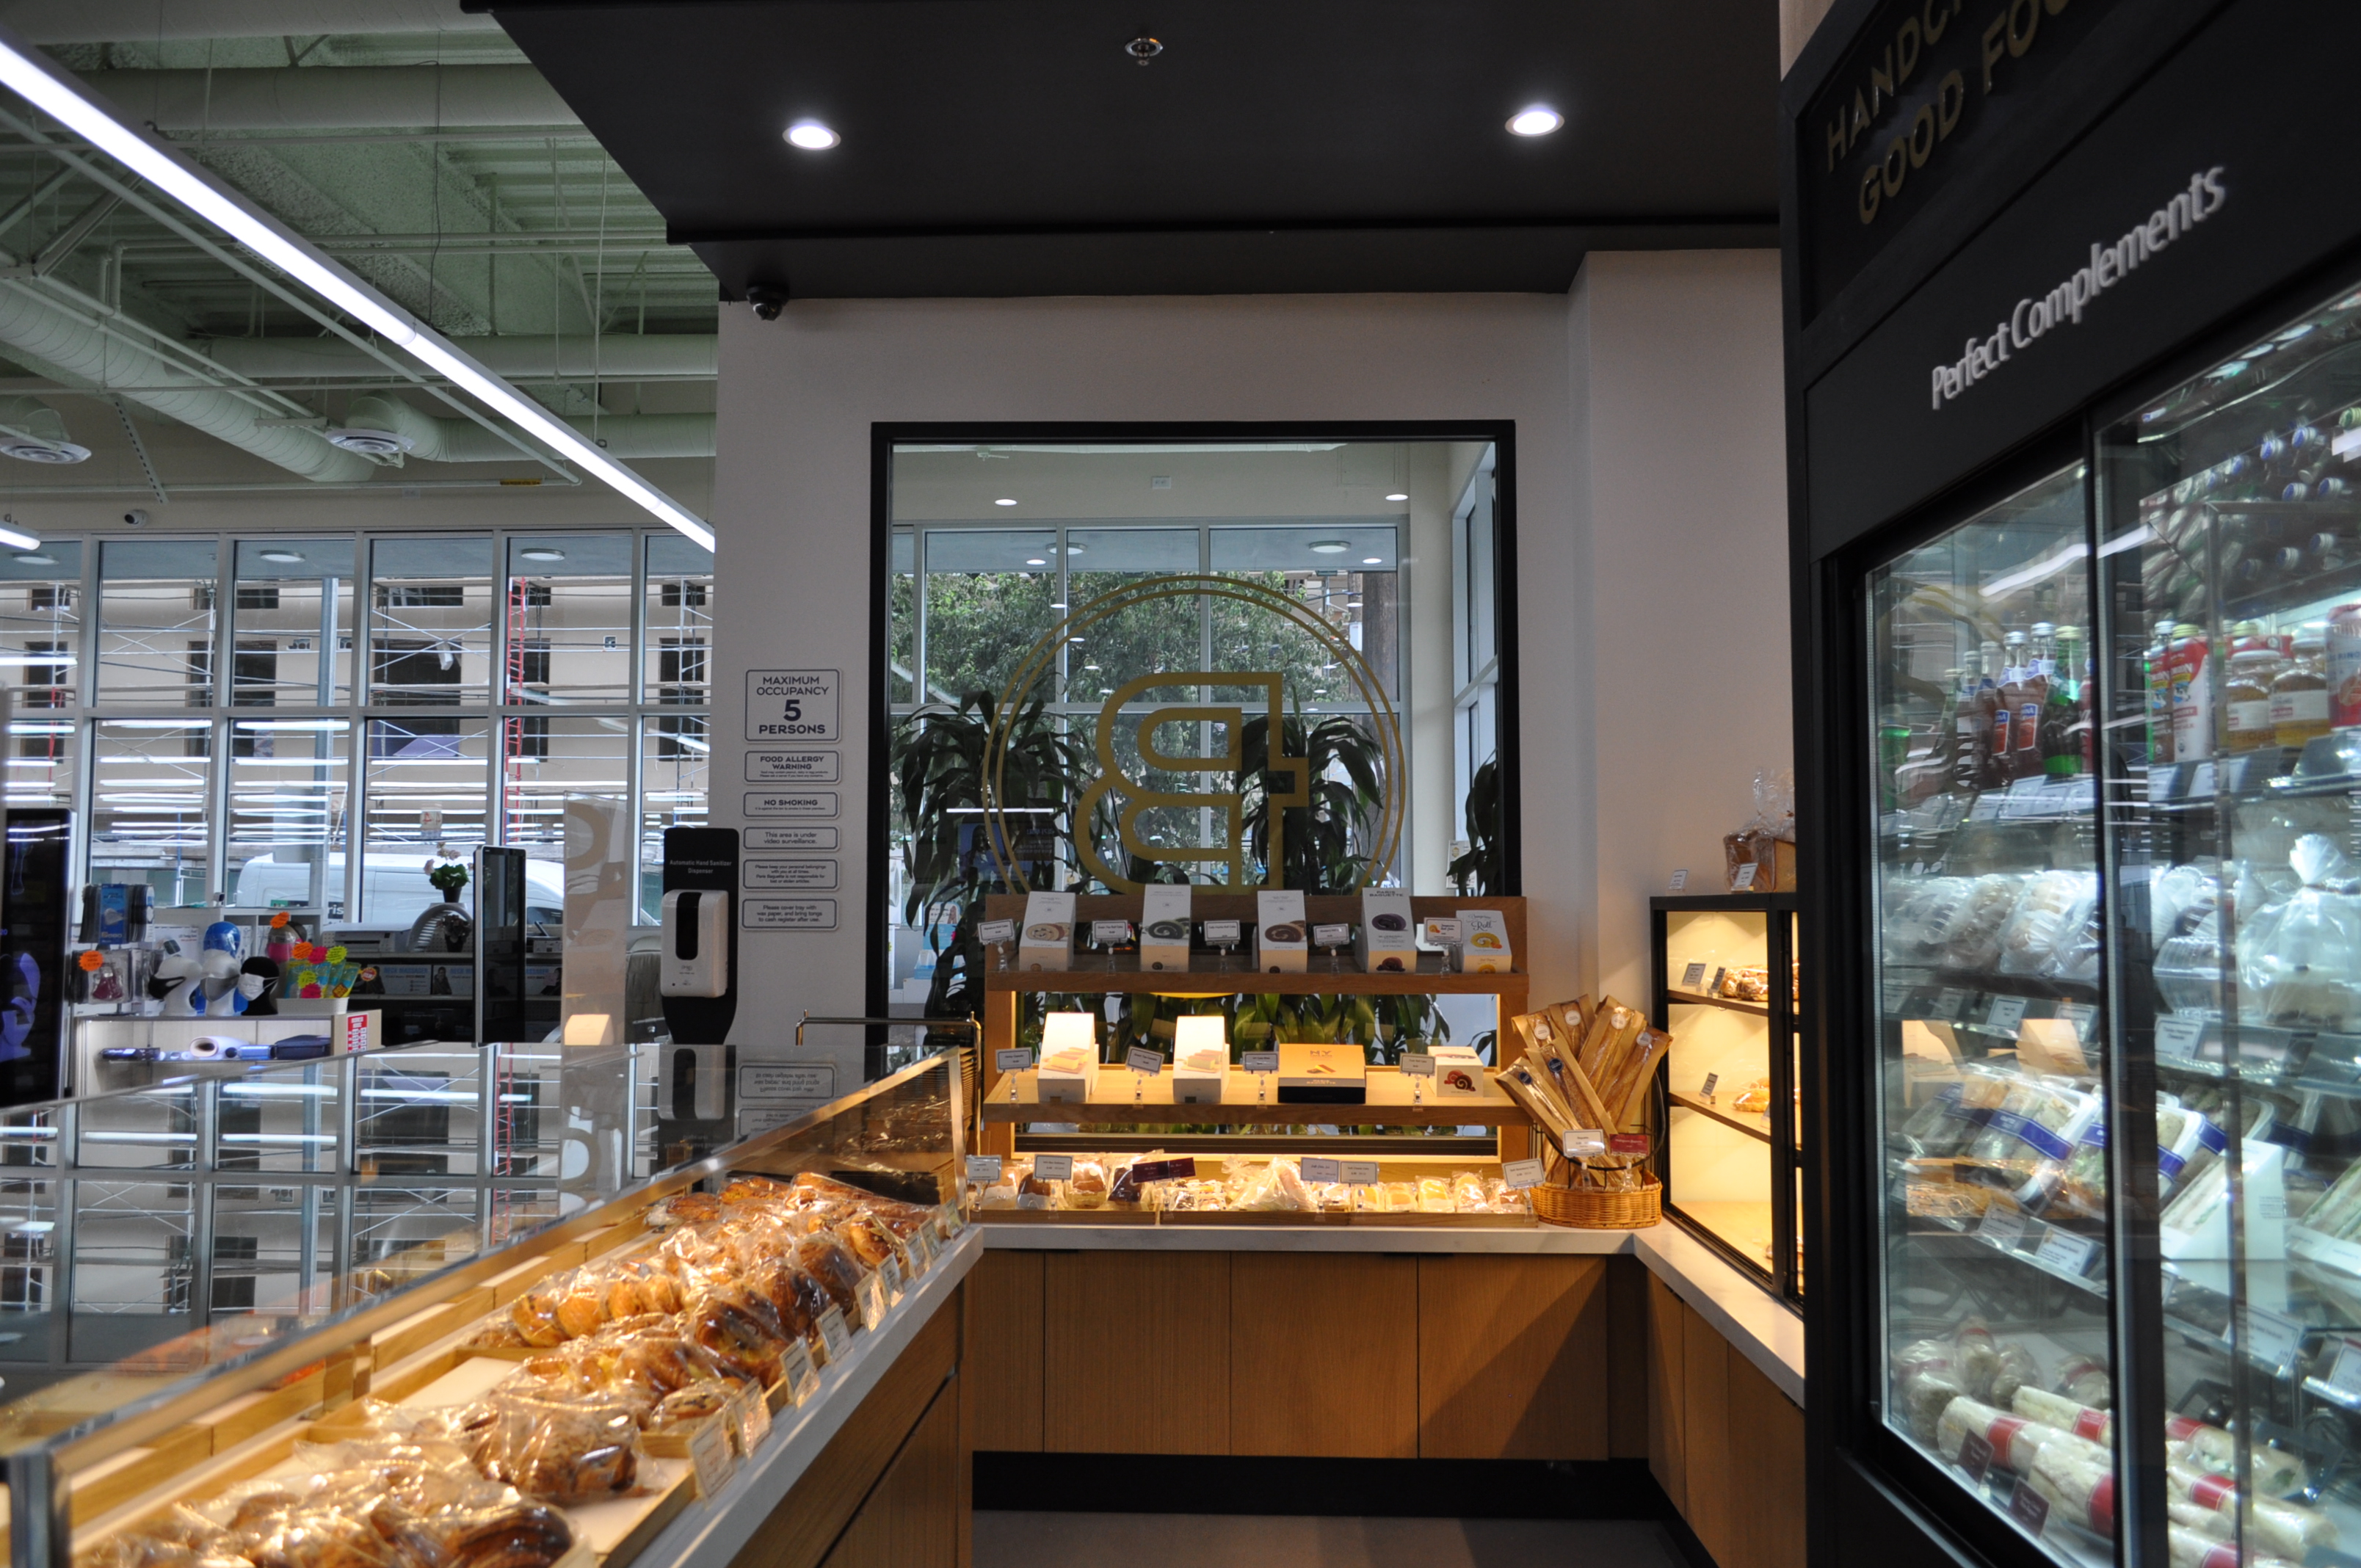 A building interior picture of paris baguette store. Bread display cases.